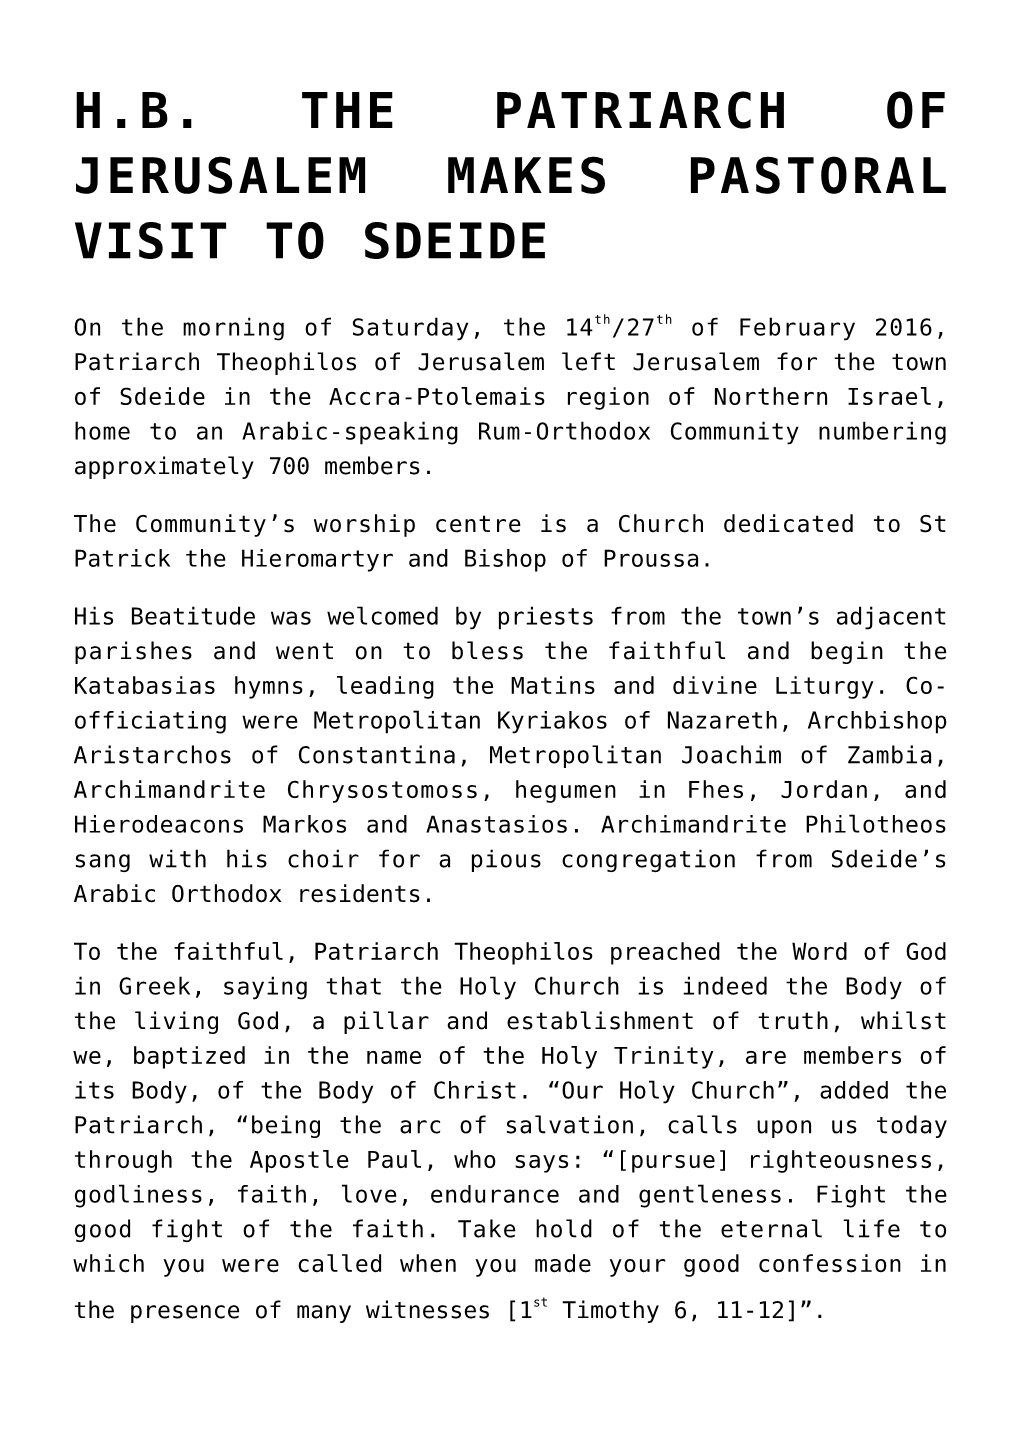 H.B. the Patriarch of Jerusalem Makes Pastoral Visit to Sdeide